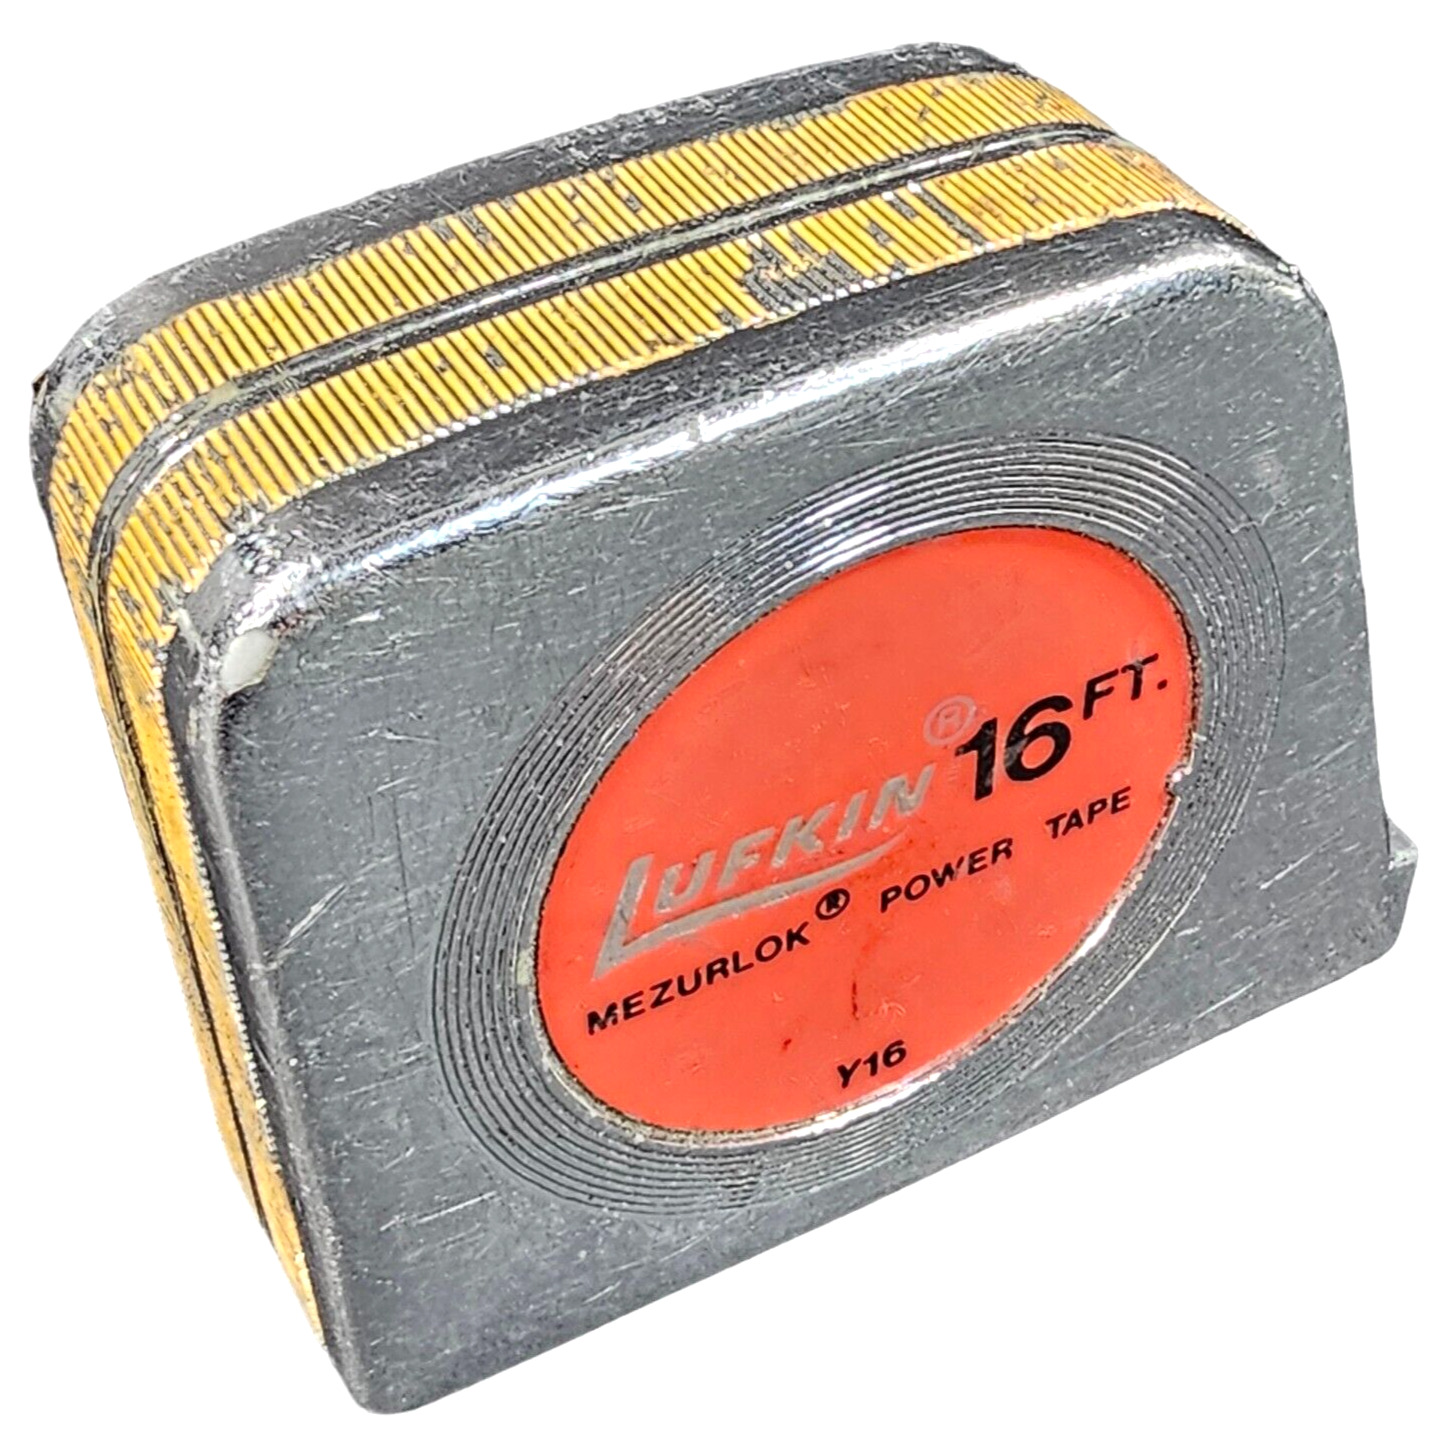 Lufkin Y16 Tape Measure 16 Ft Mezurlok Power Tape Made in USA Vintage